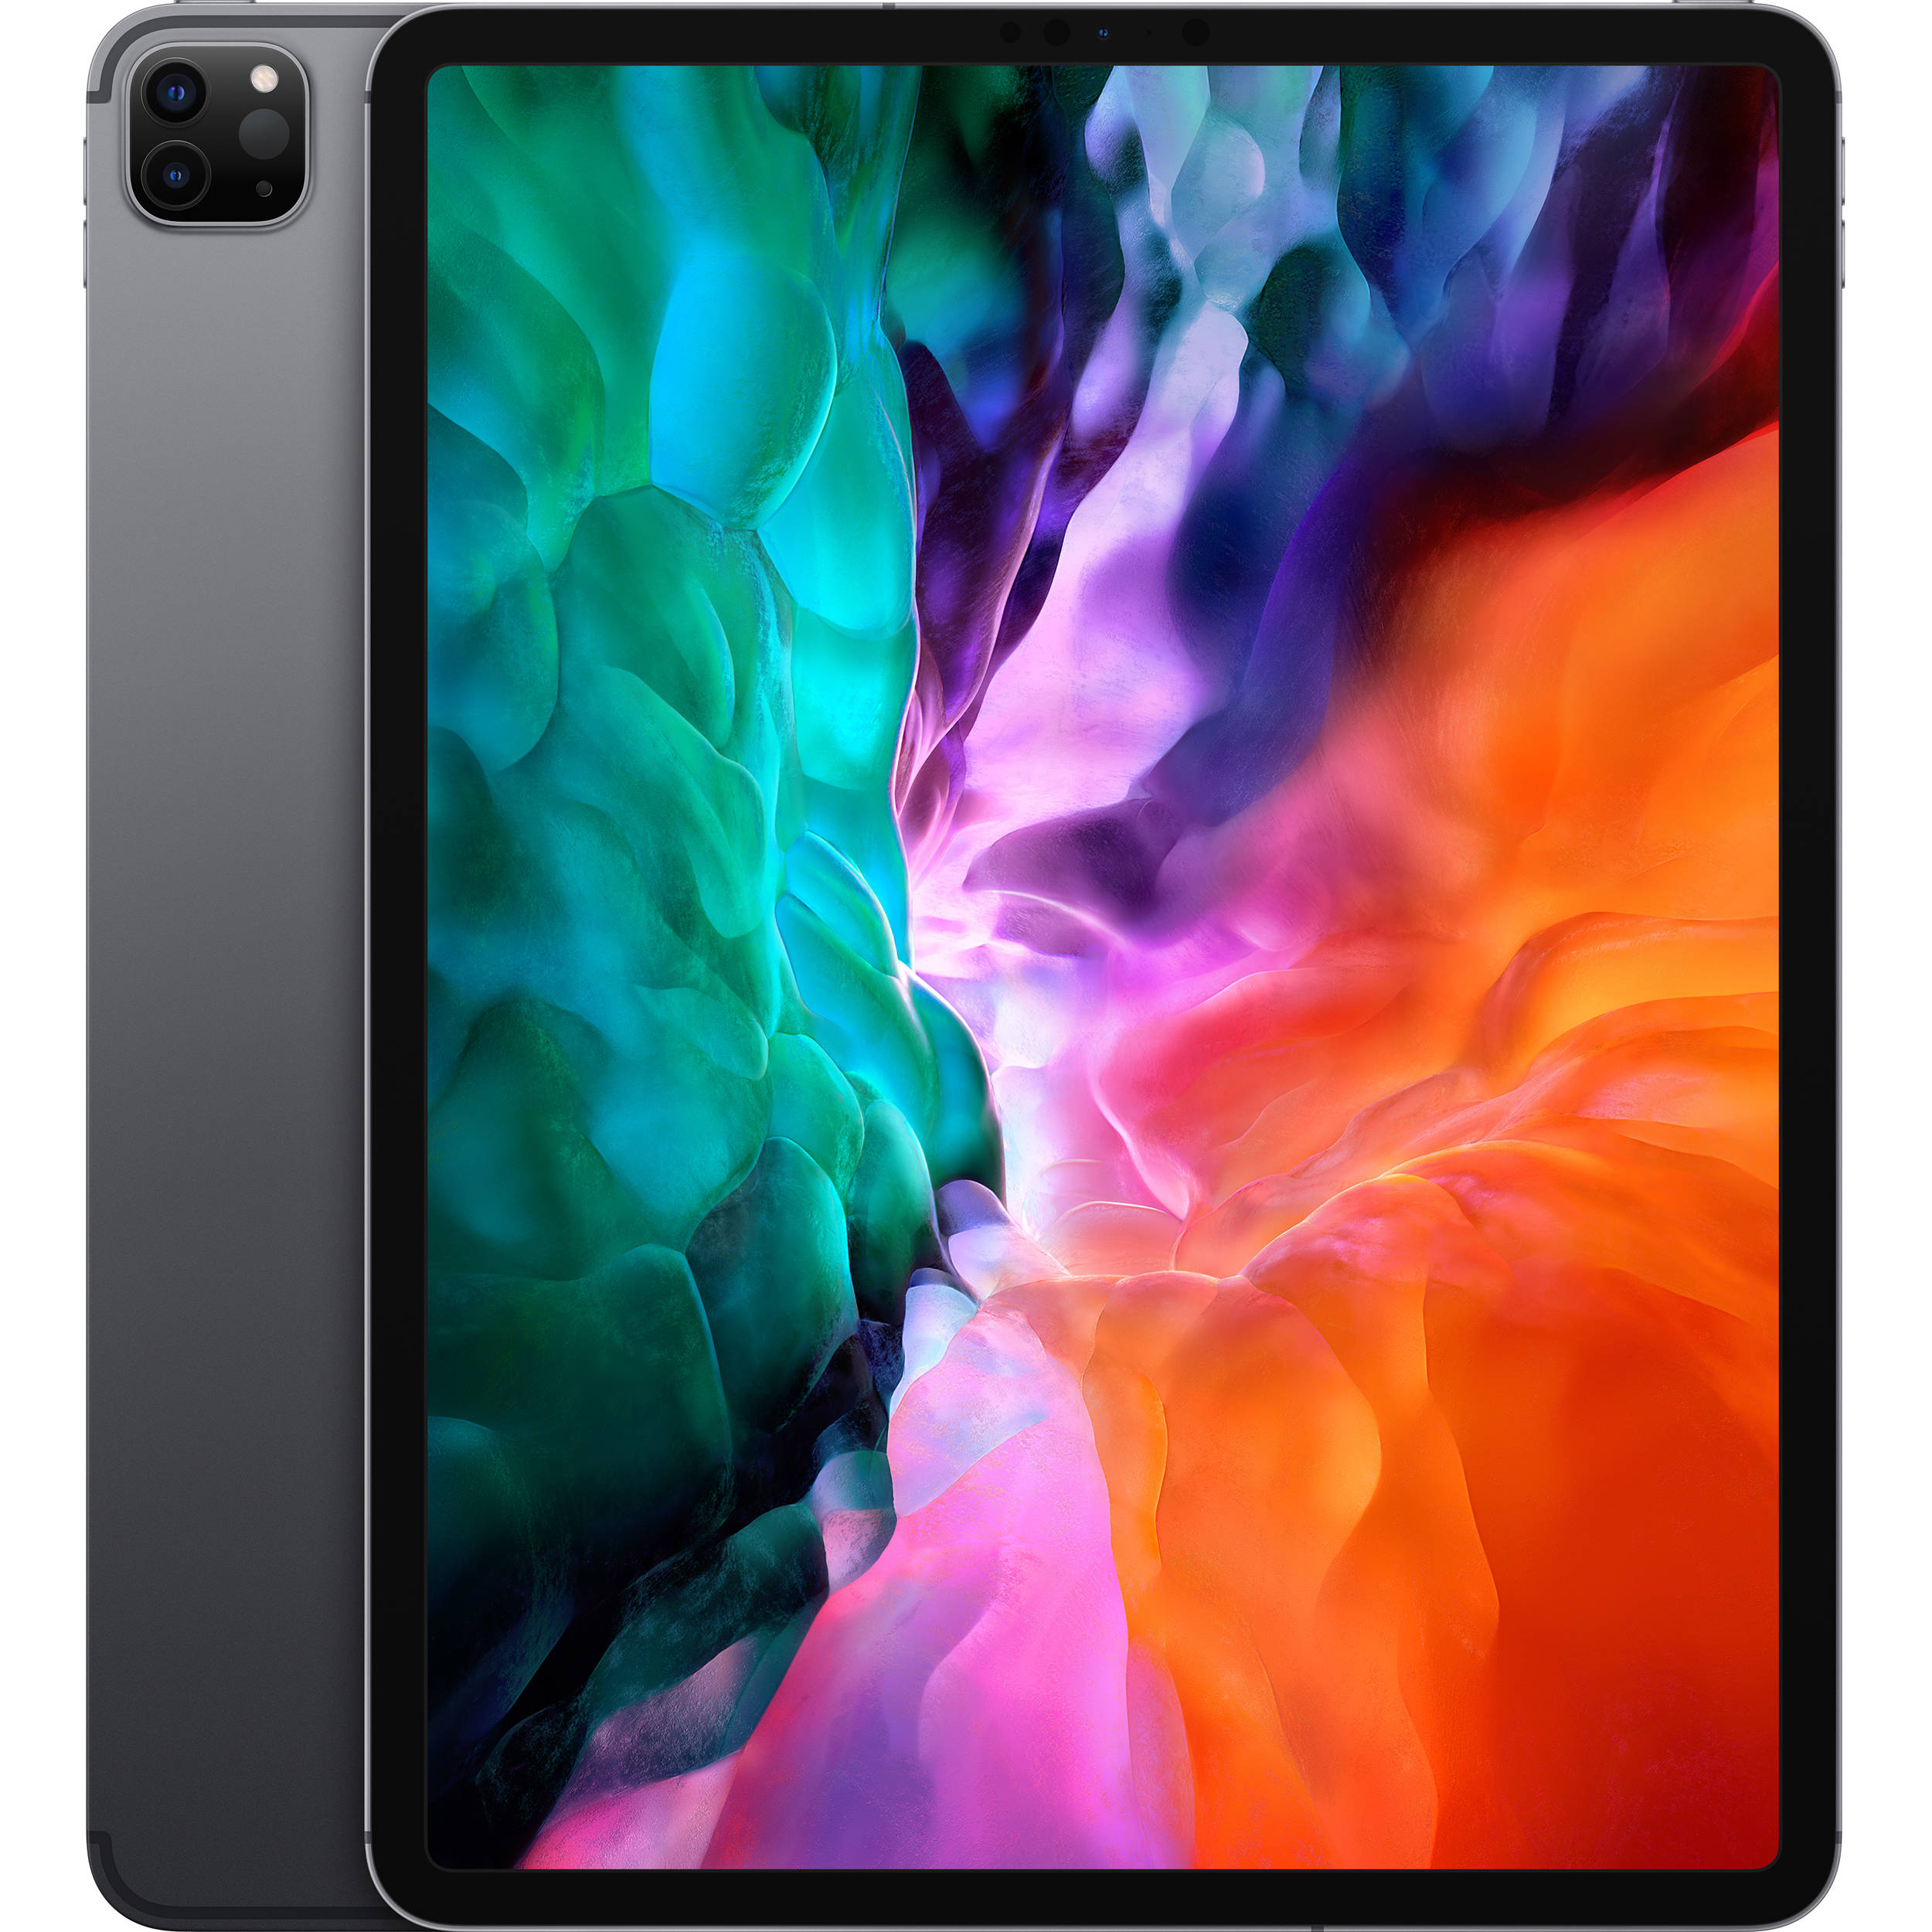 2020 Apple iPad Pro 12.9-inch, Wi-Fi + Cellular, 256GB - Space Grey - MXFX2LL/A - Refurbished Excellent